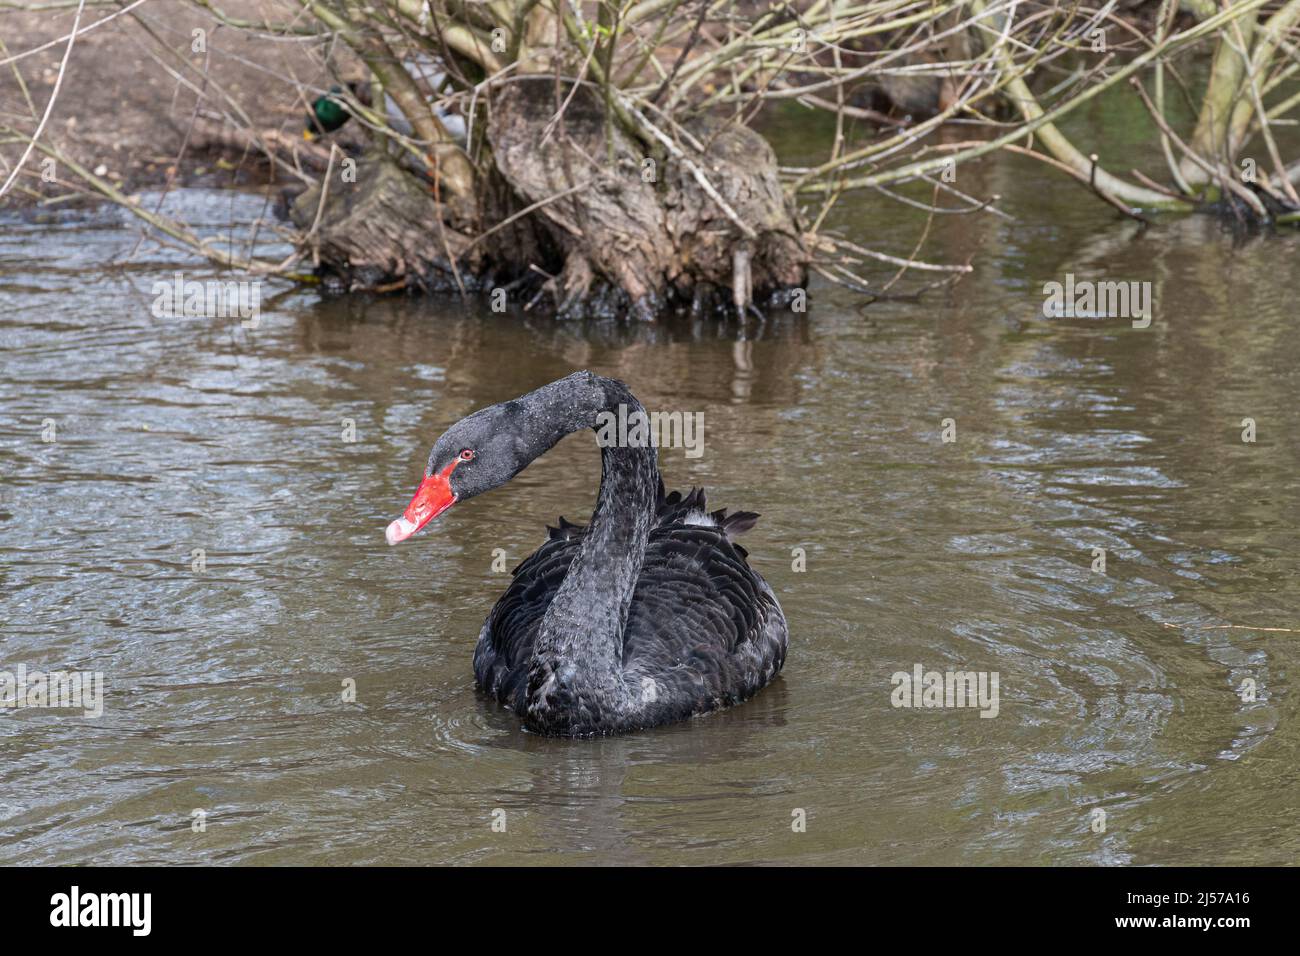 Black swan (Cygnus atratus), large bird species swimming on a lake Stock Photo